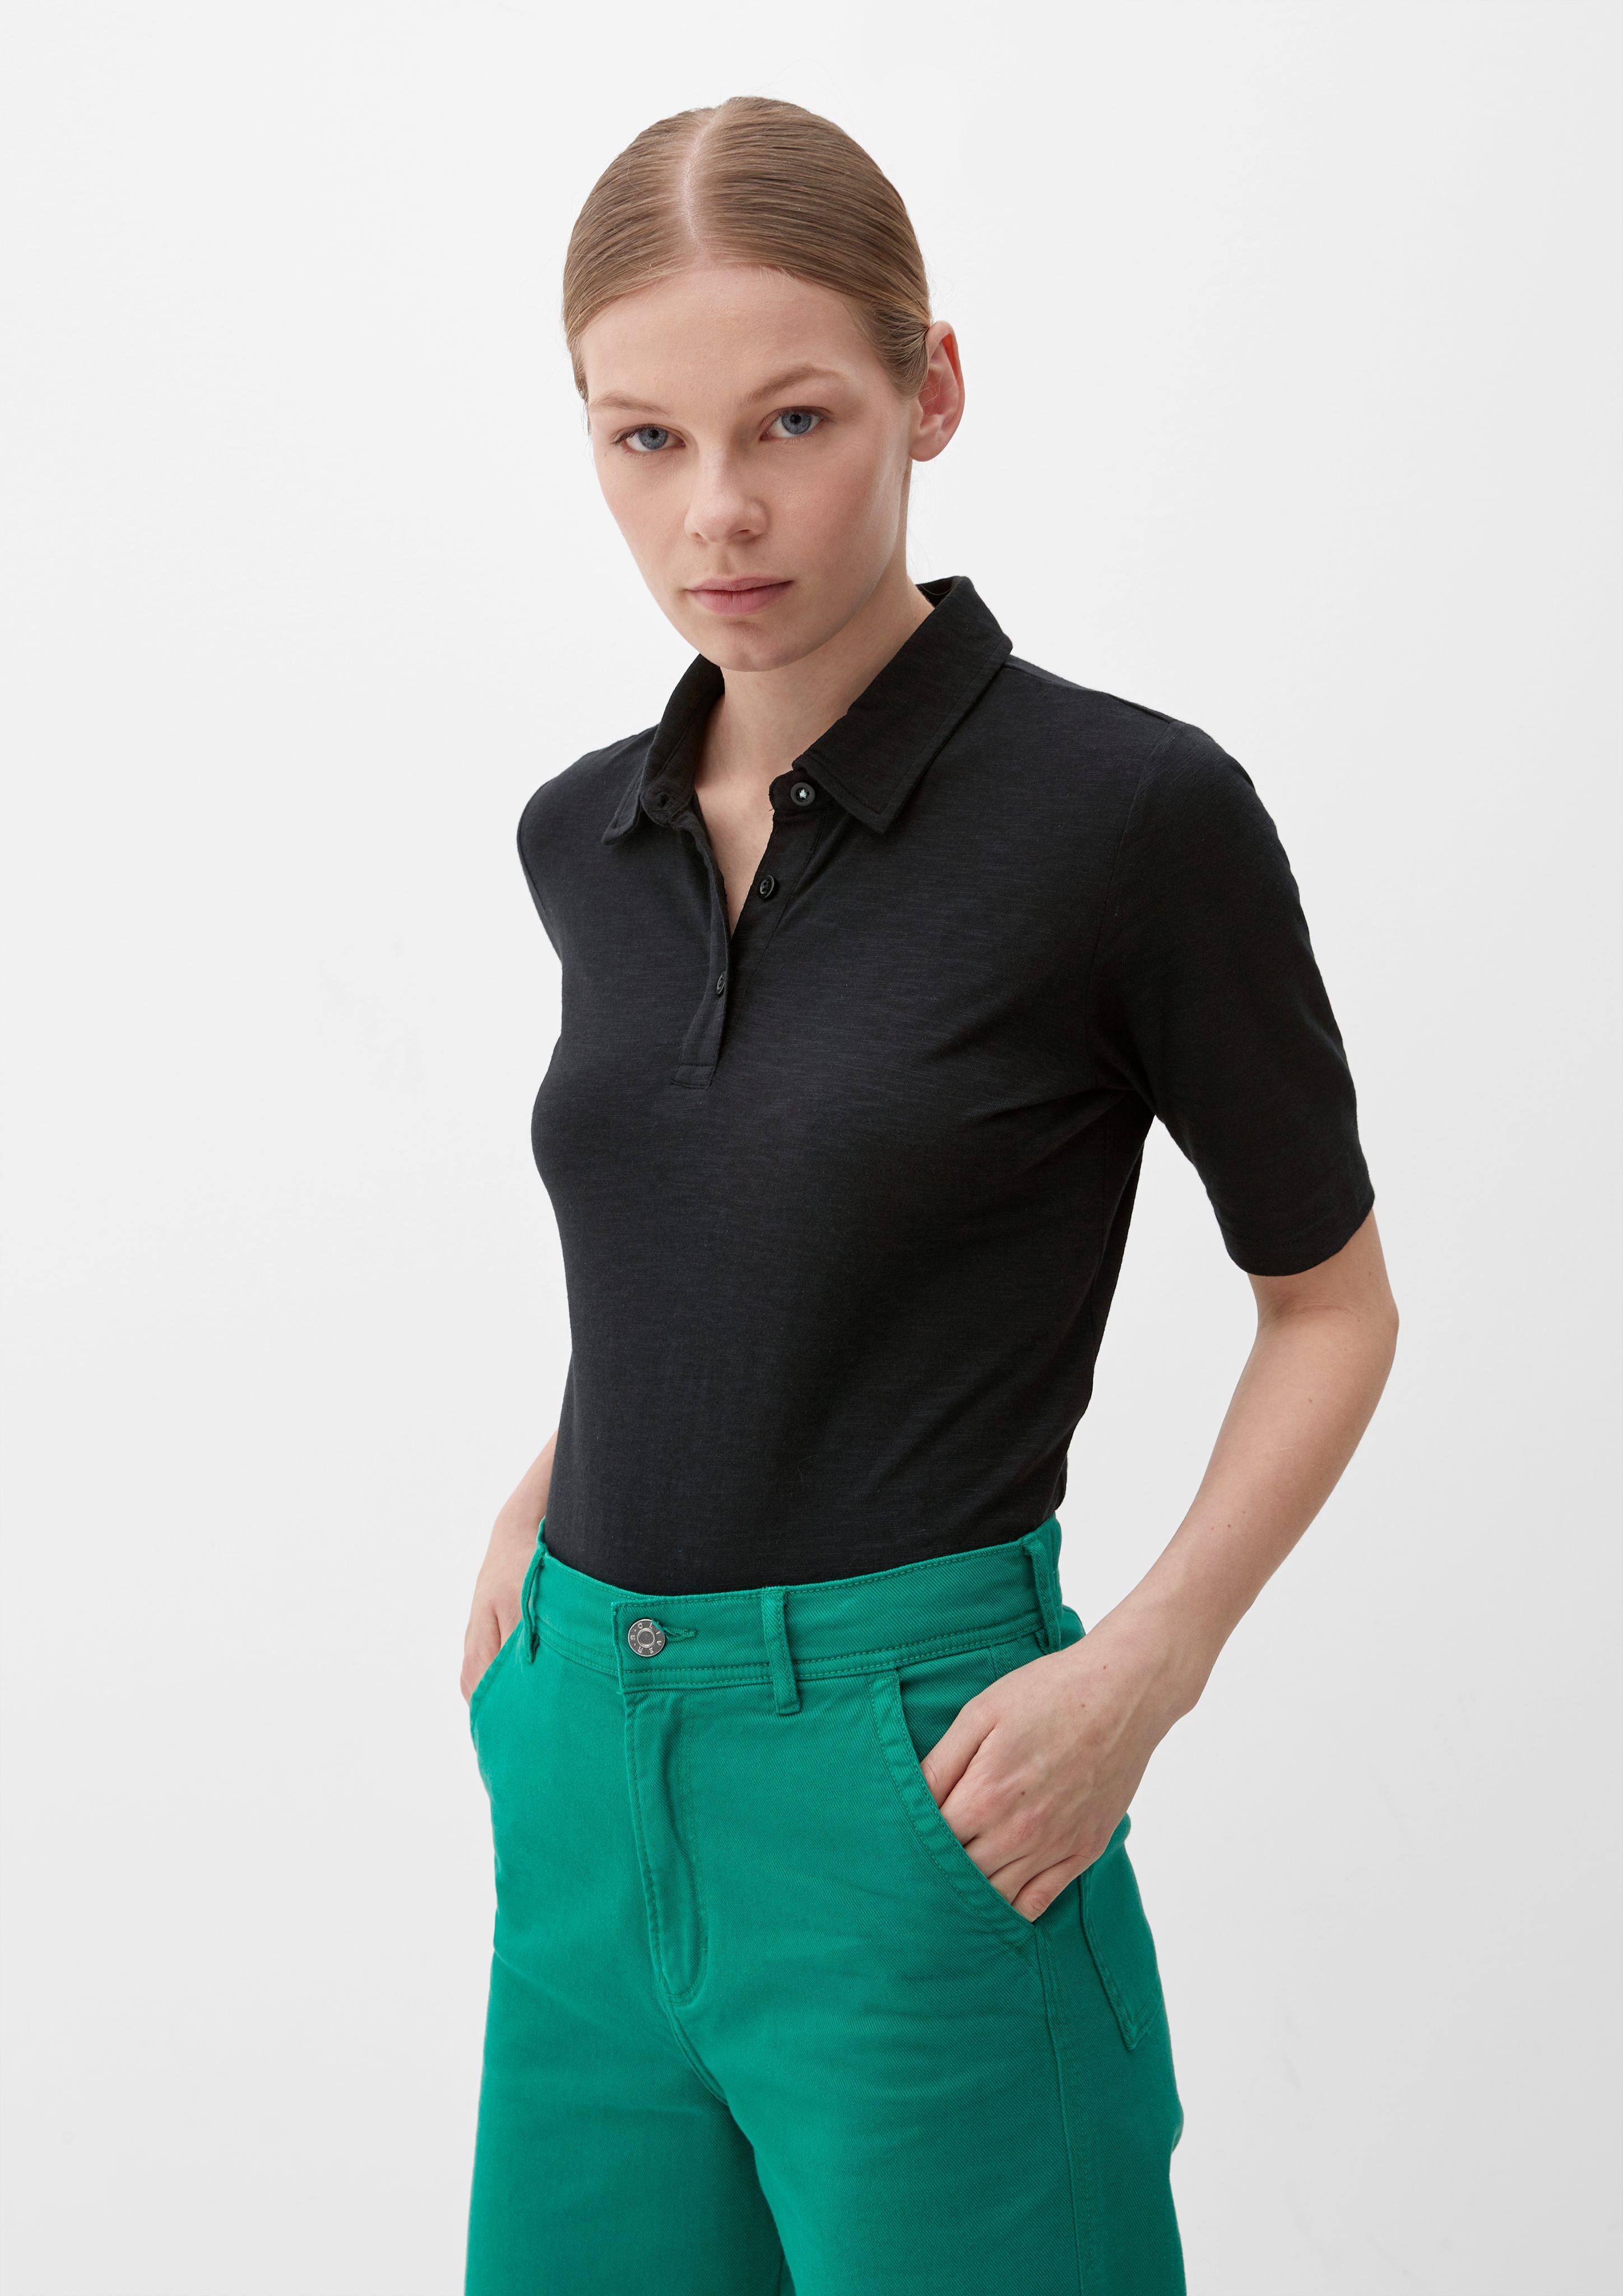 s.Oliver Kurzarmshirt Polo-Shirt Viskosemix schwarz aus